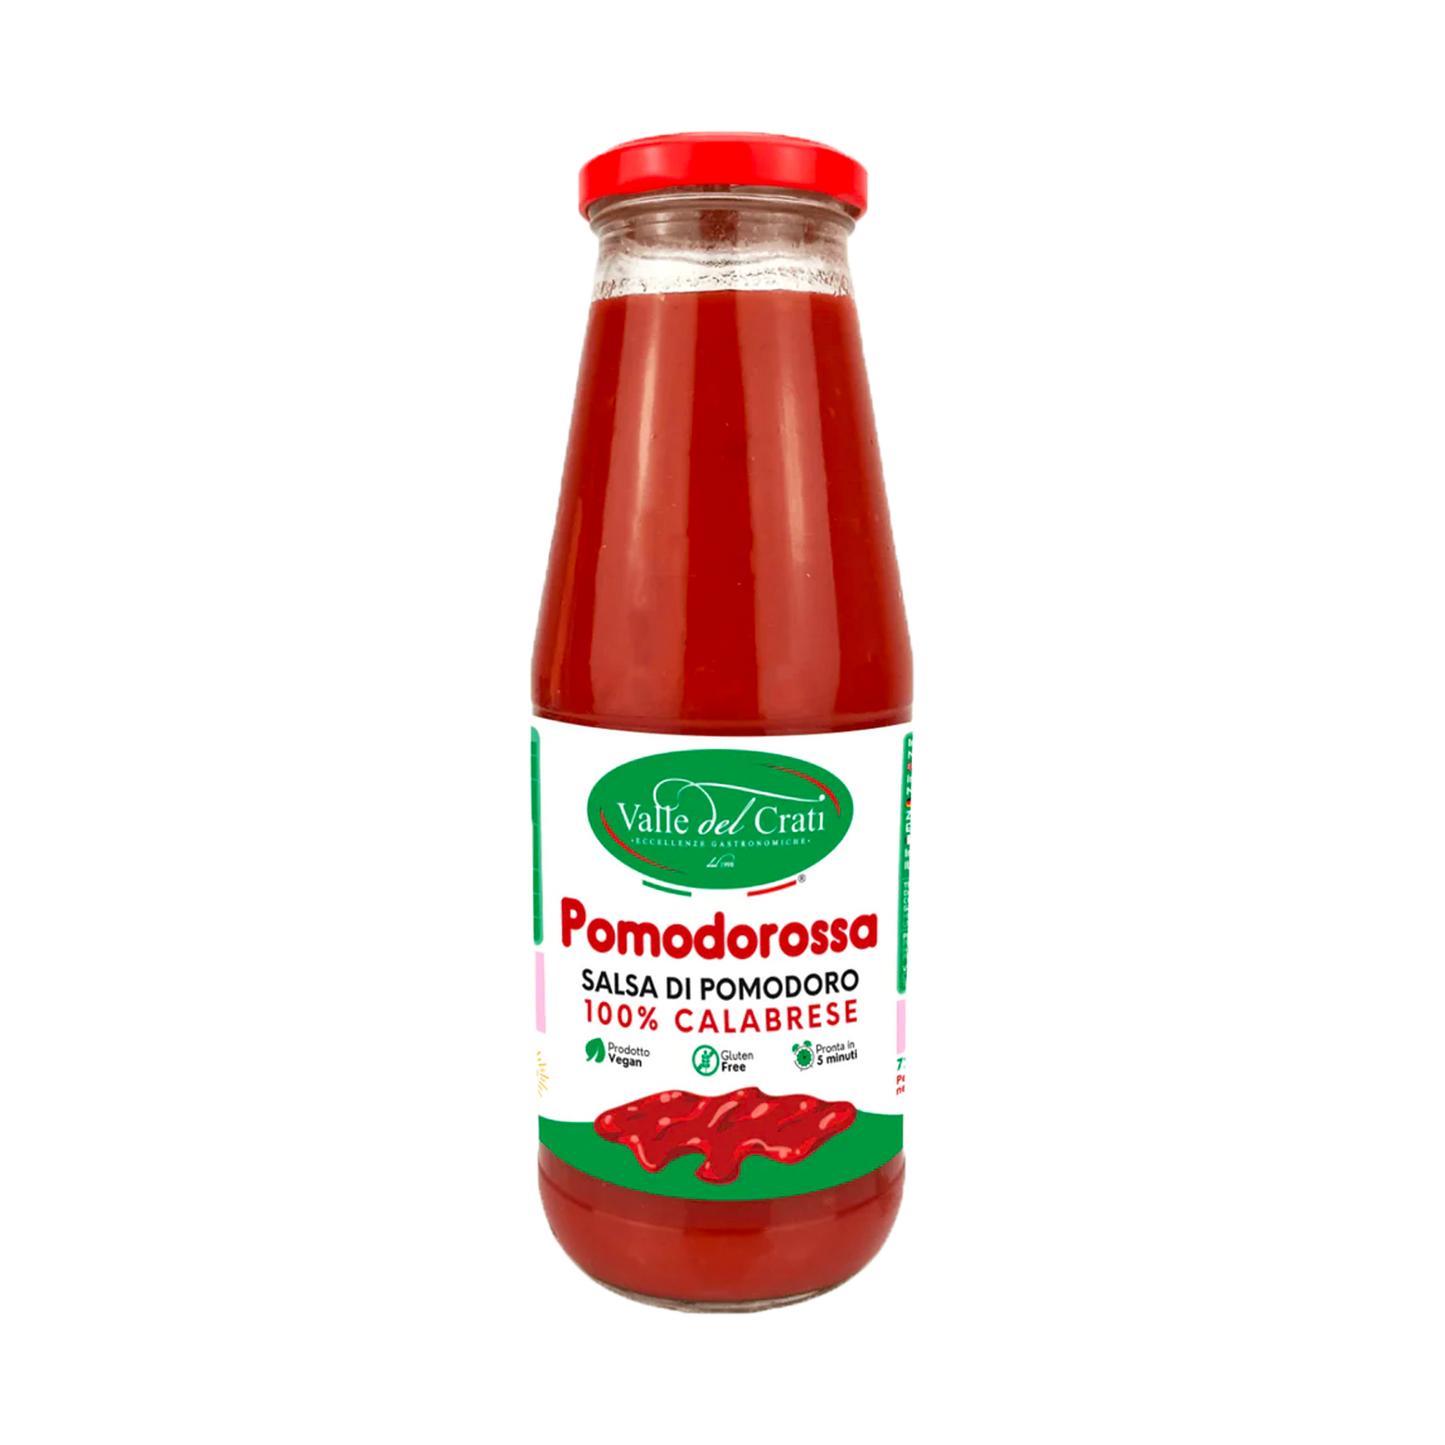 Pomodororossa - Salsa di pomodoro